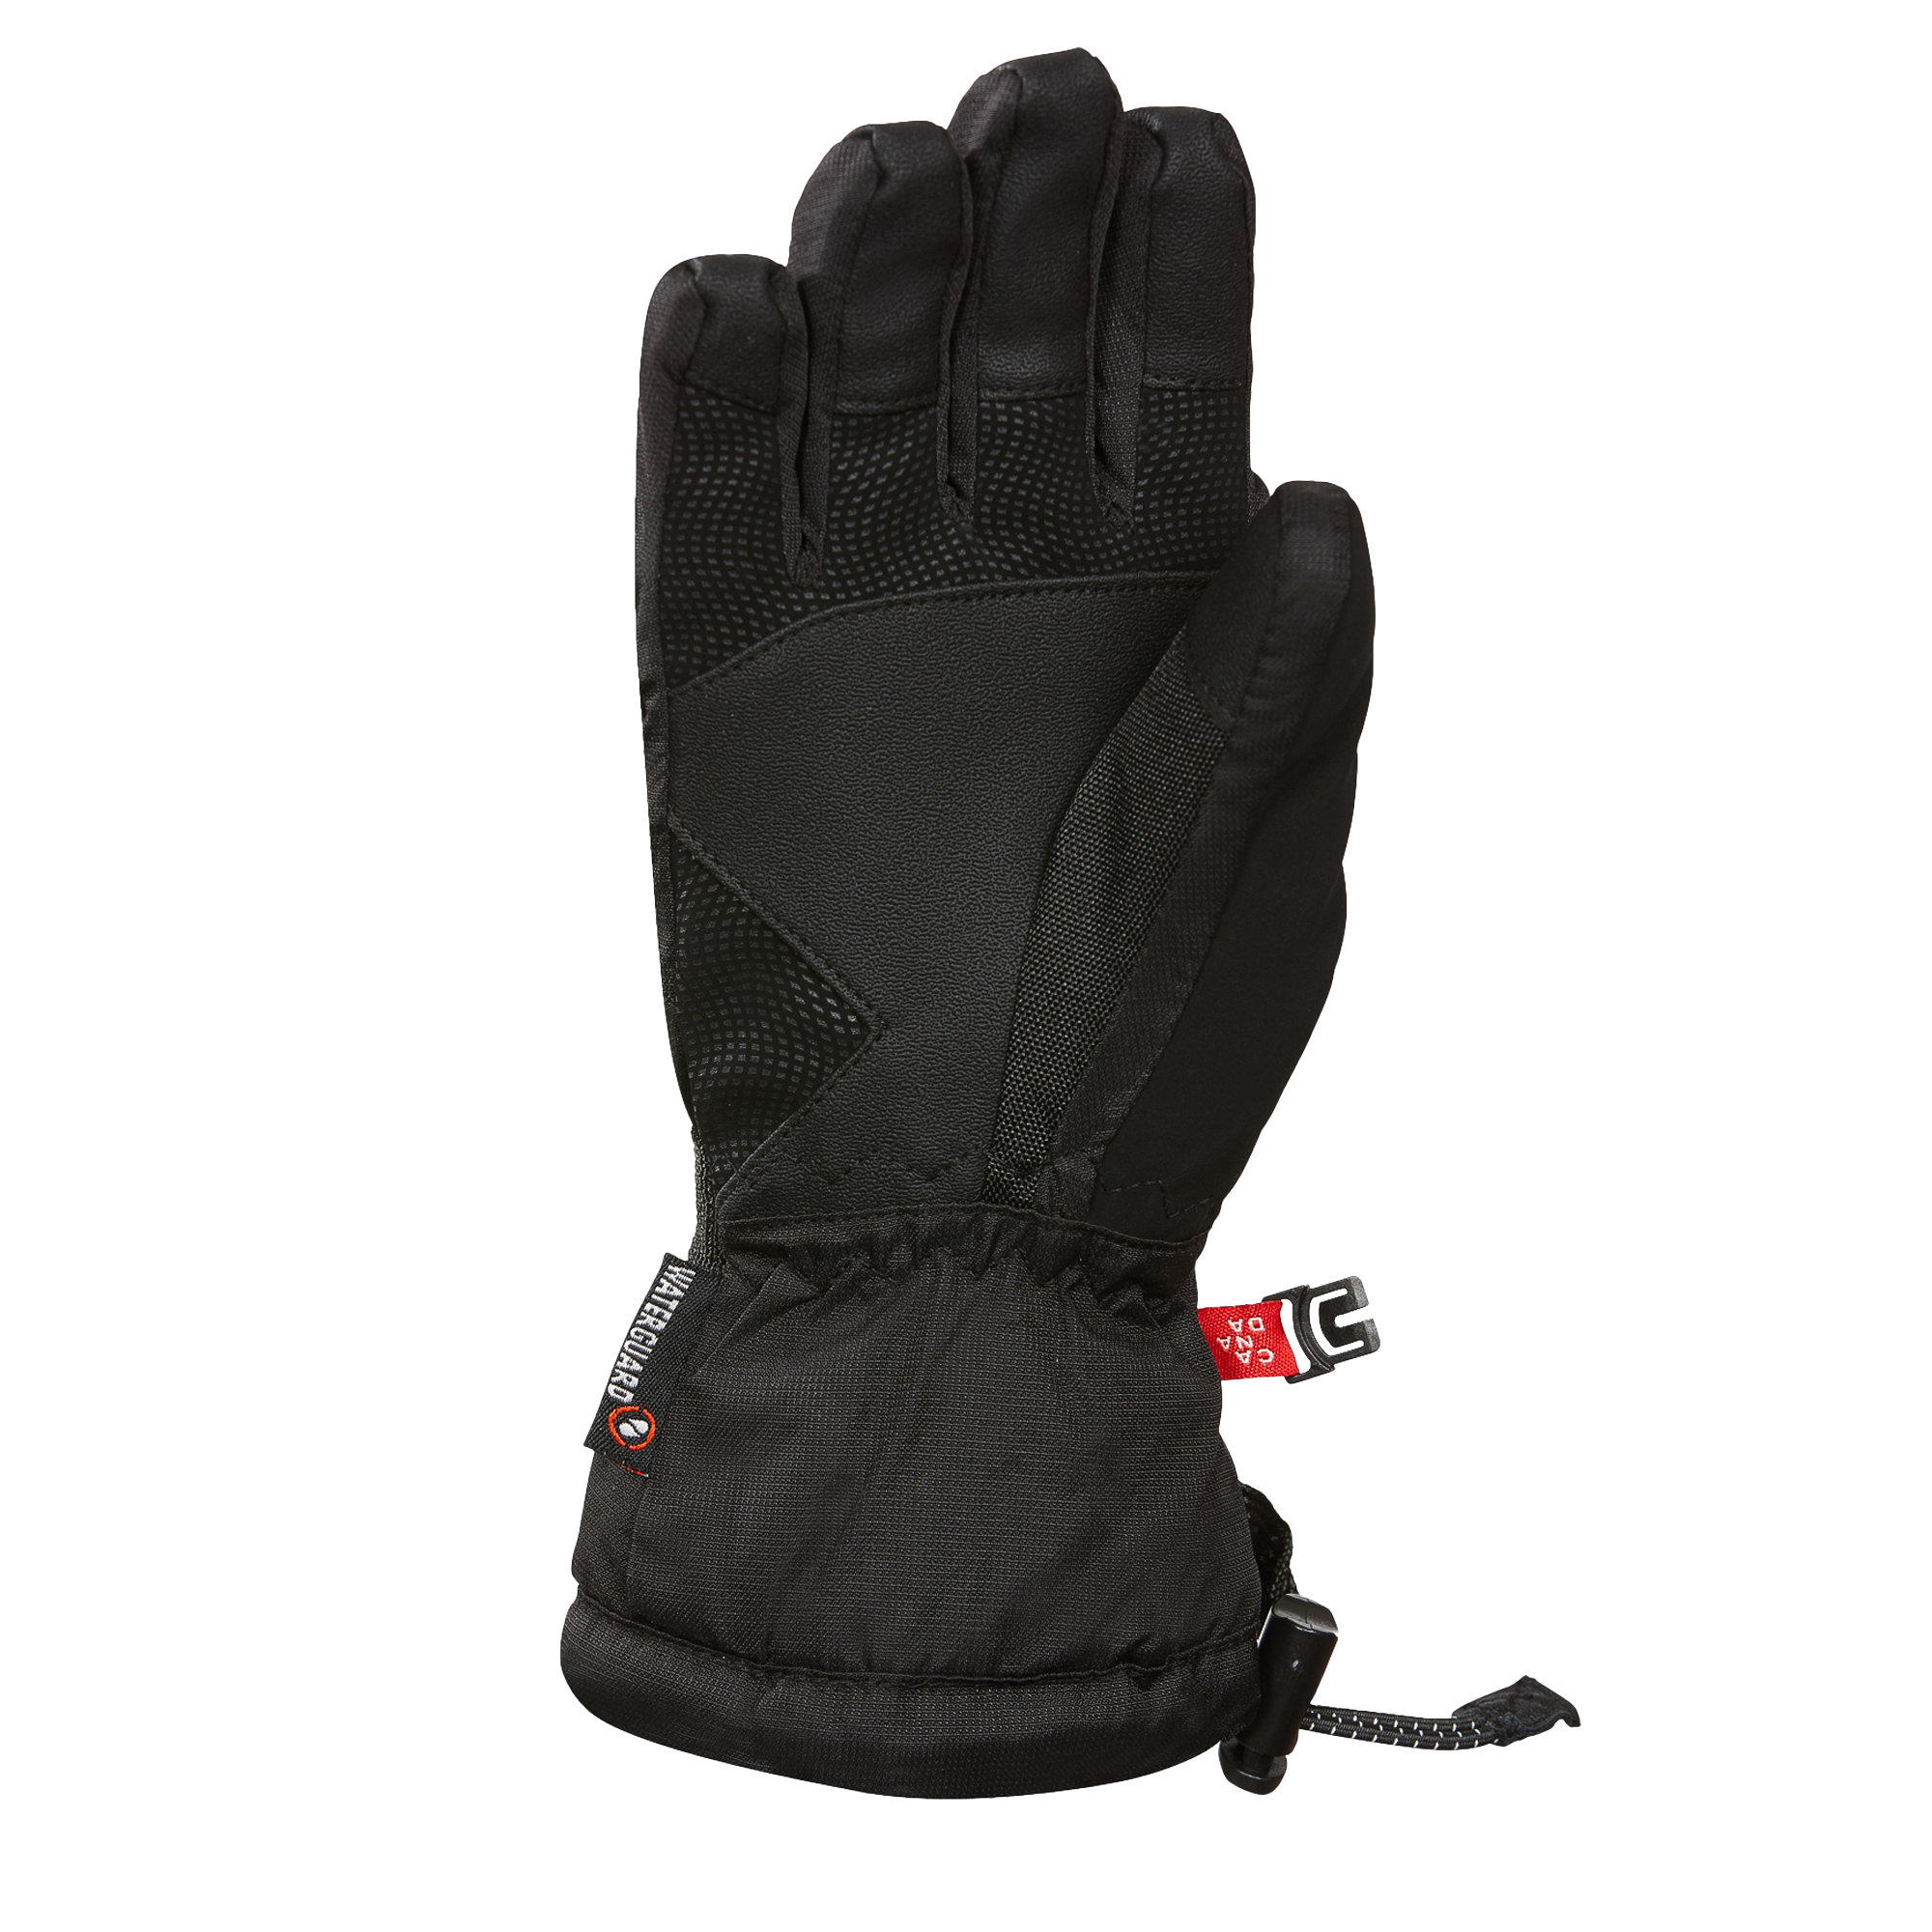 Kombi - The Yolo Junior Gloves